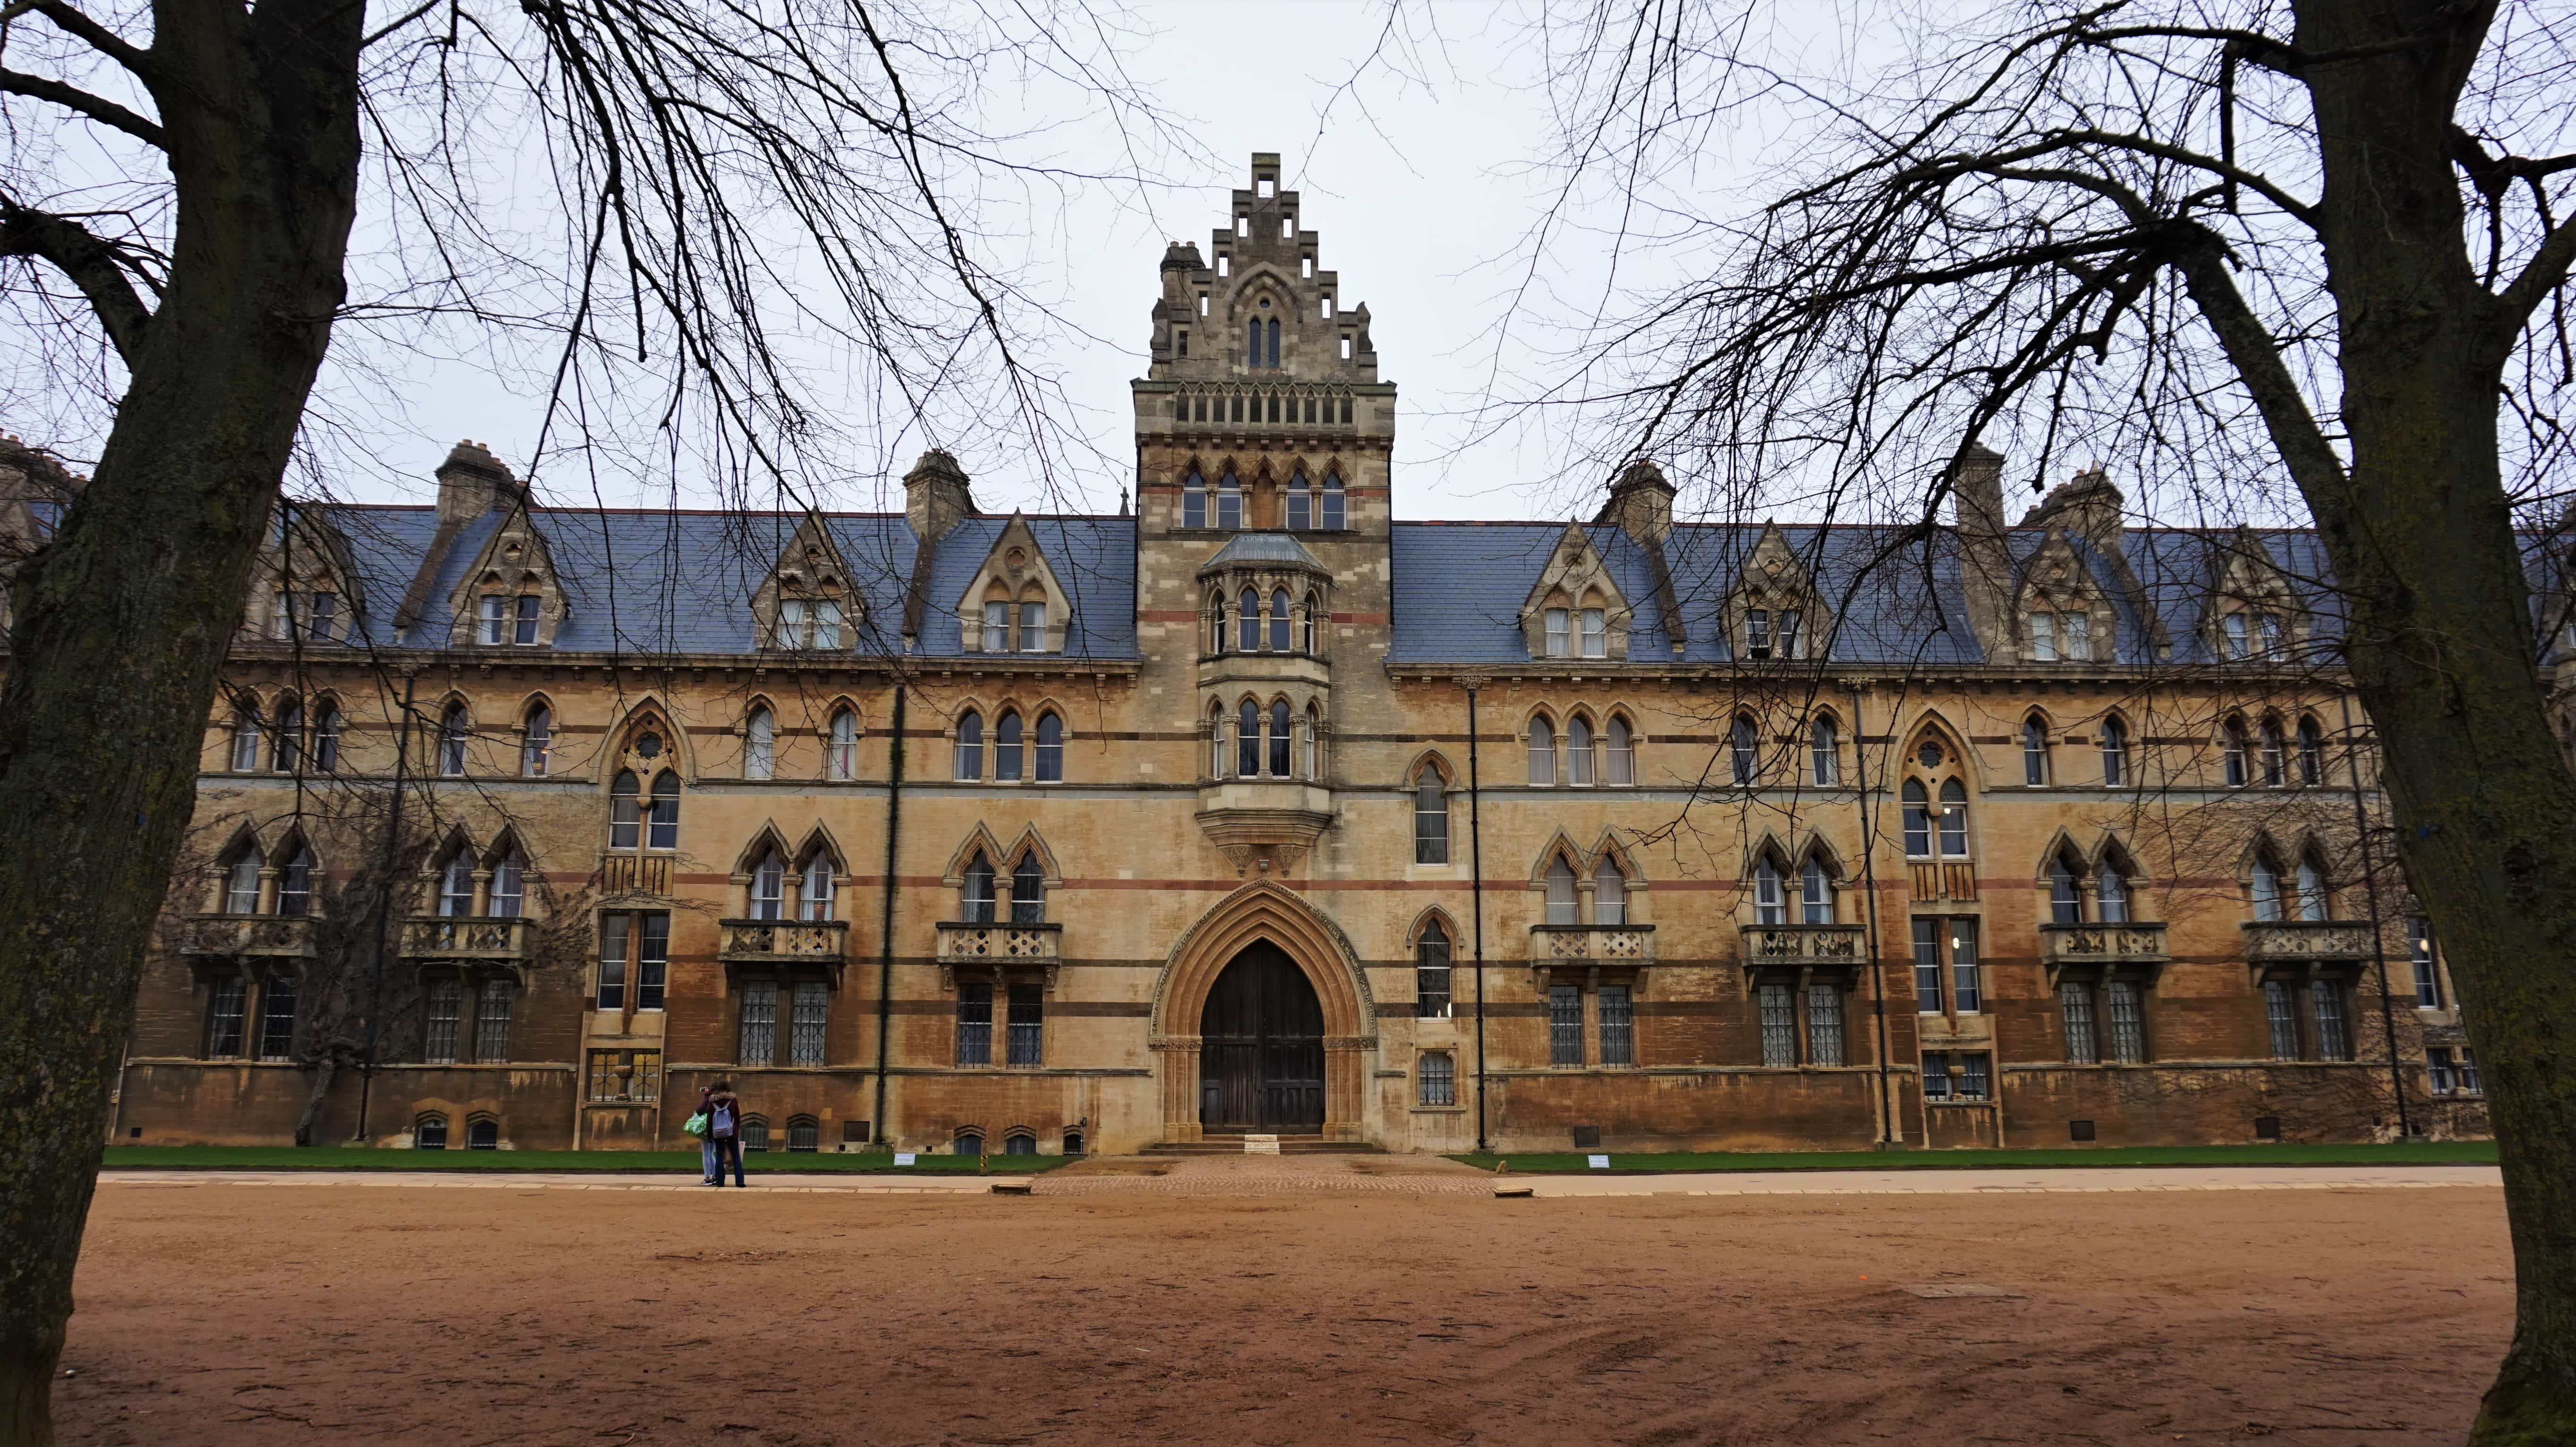 Christ Church College in Oxford